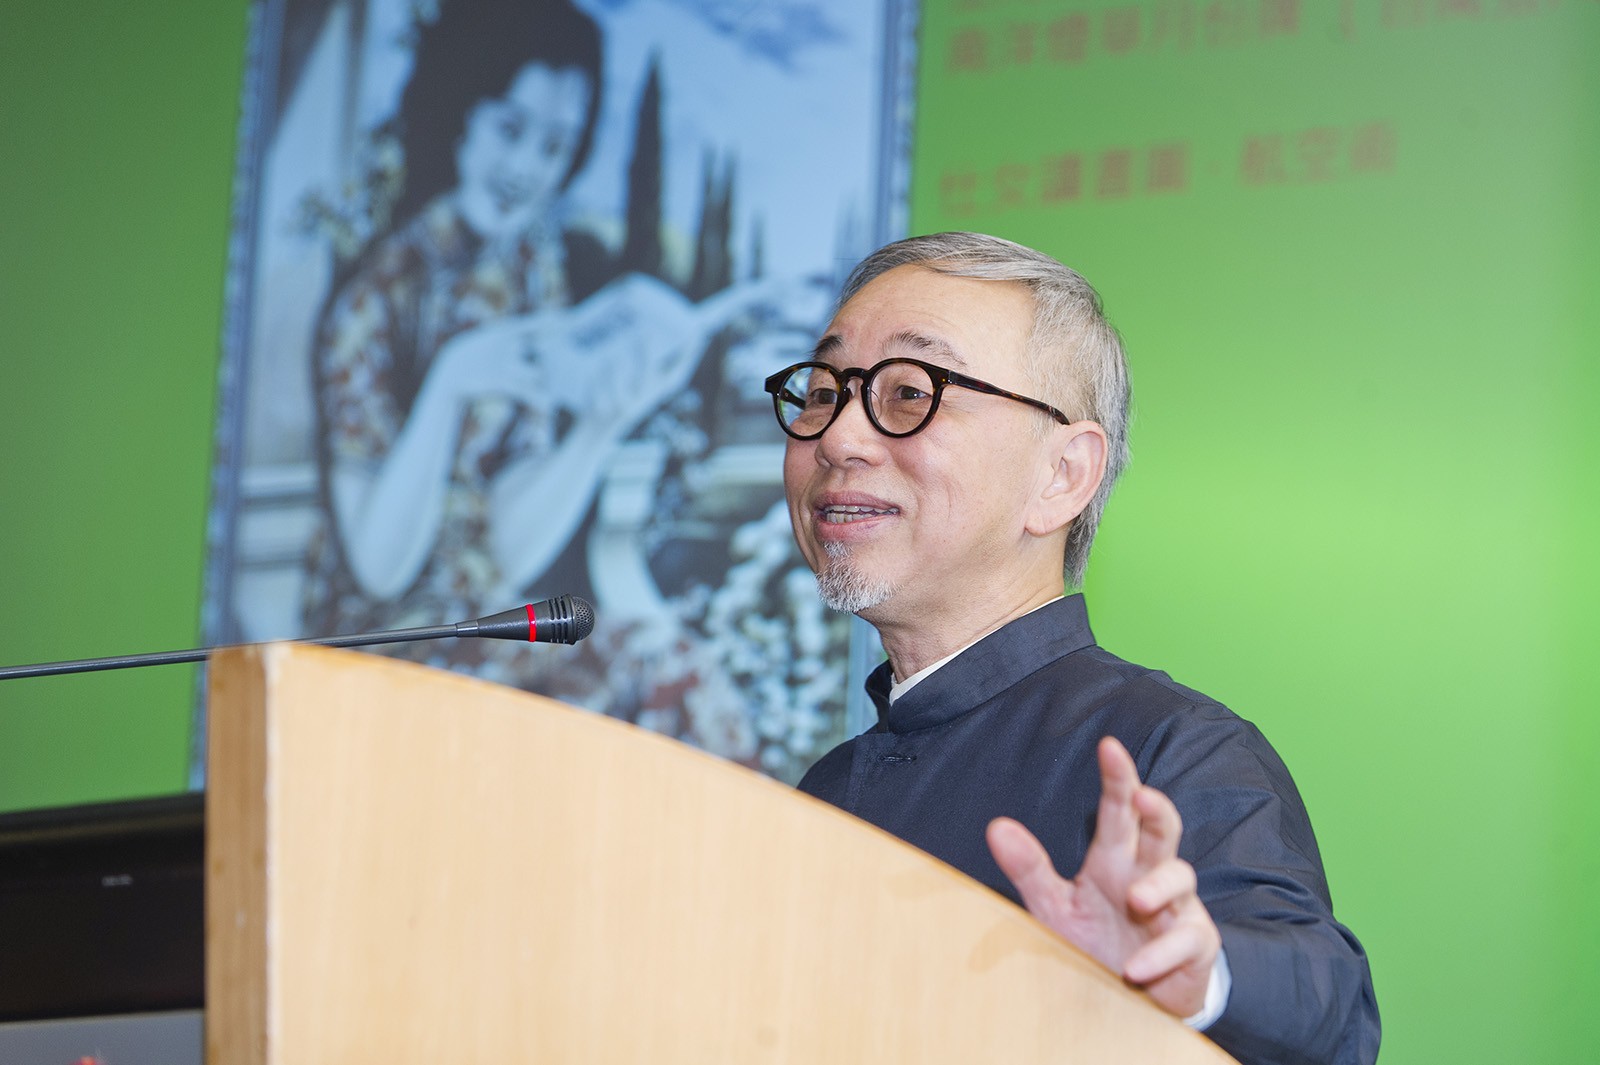 Professor Shih Shou-chien